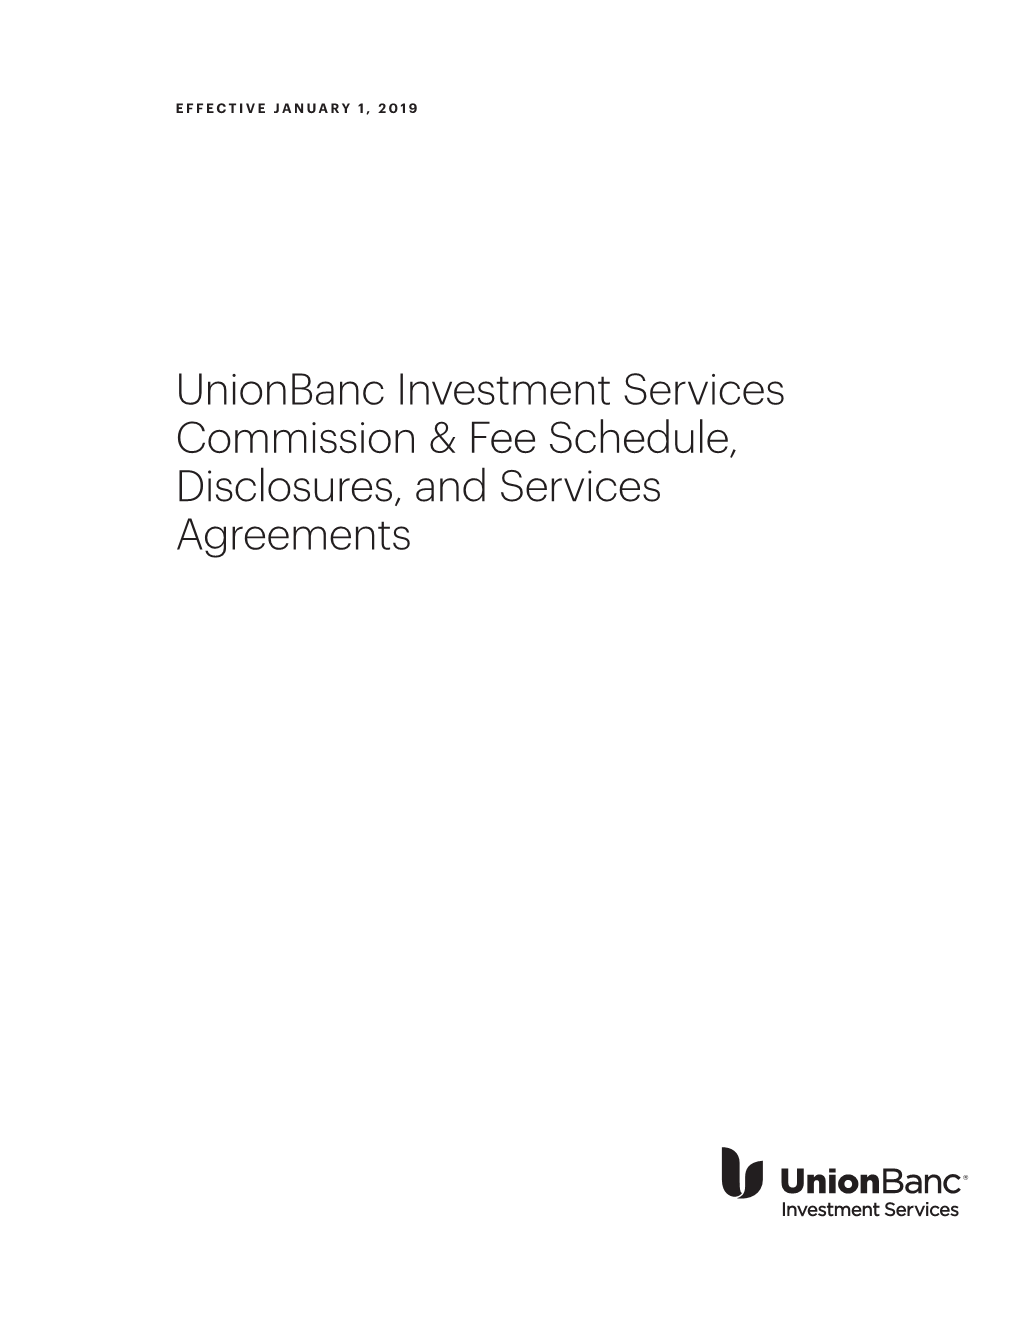 Unionbanc Investment Services Commission & Fee Schedule